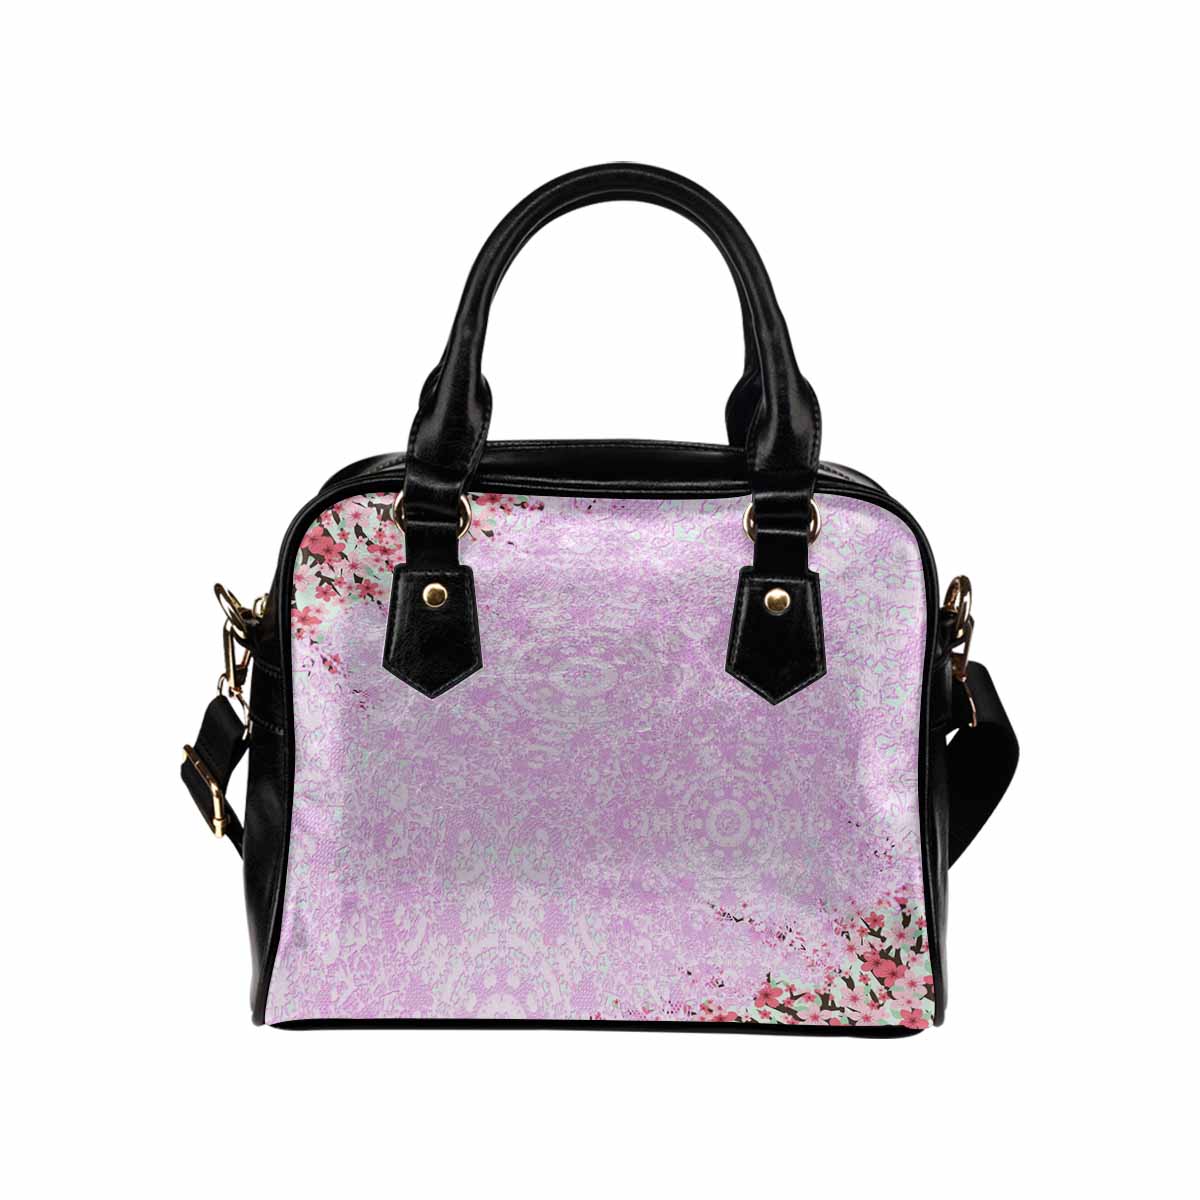 Victorian lace print, cute handbag, Mod 19163453, design 09